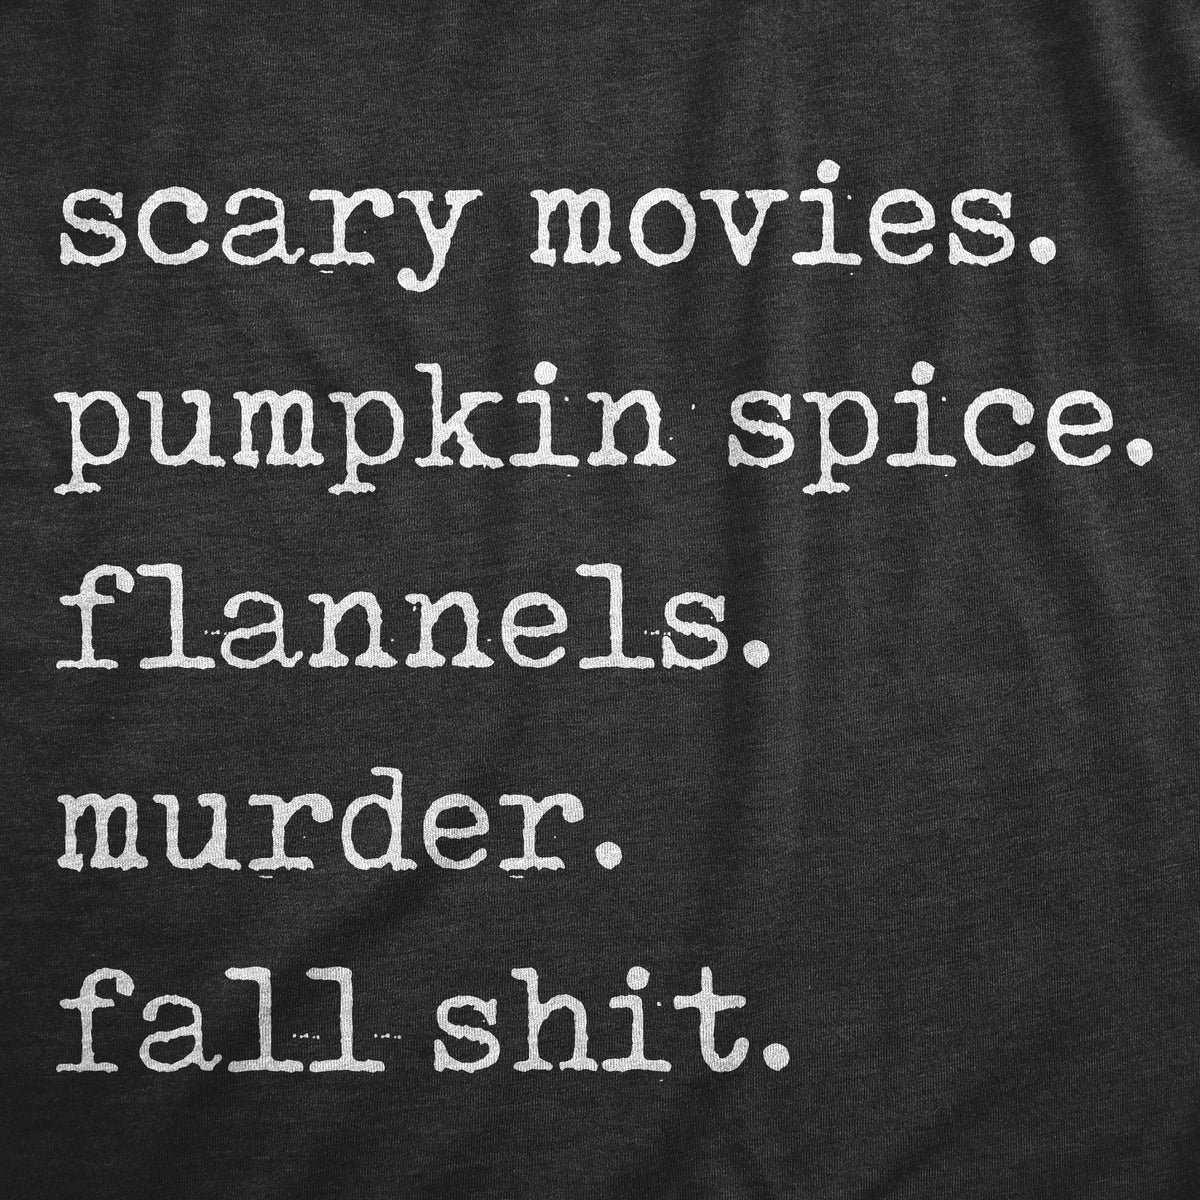 Scary Movies Pumpkin Spice Flannels Murder Fall Shit Men&#39;s Tshirt